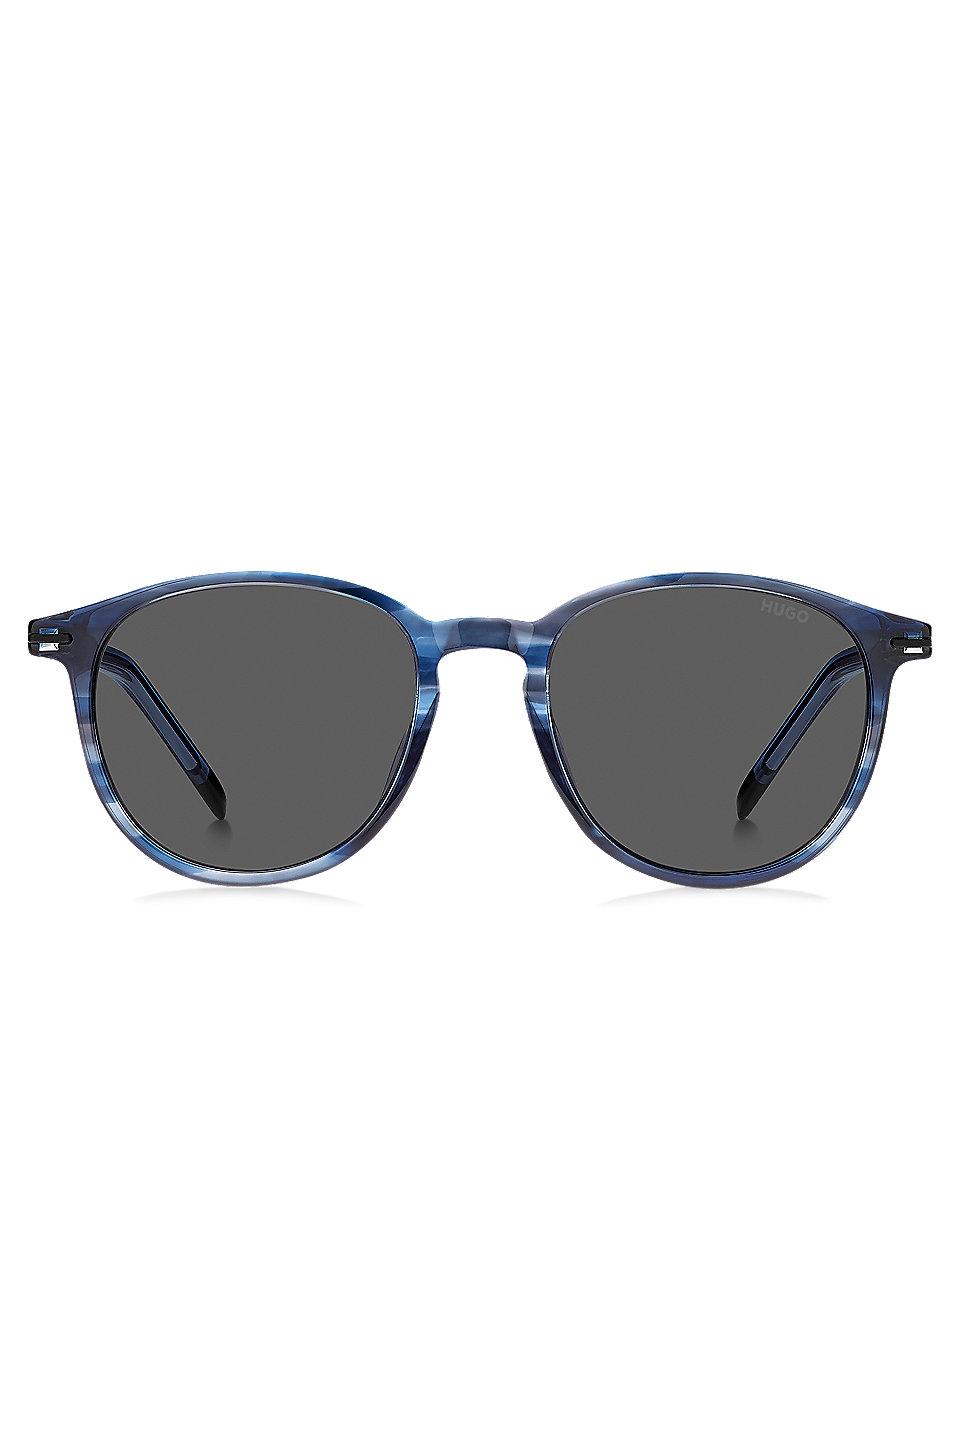 HUGO - Blue-Havana sunglasses in full acetate